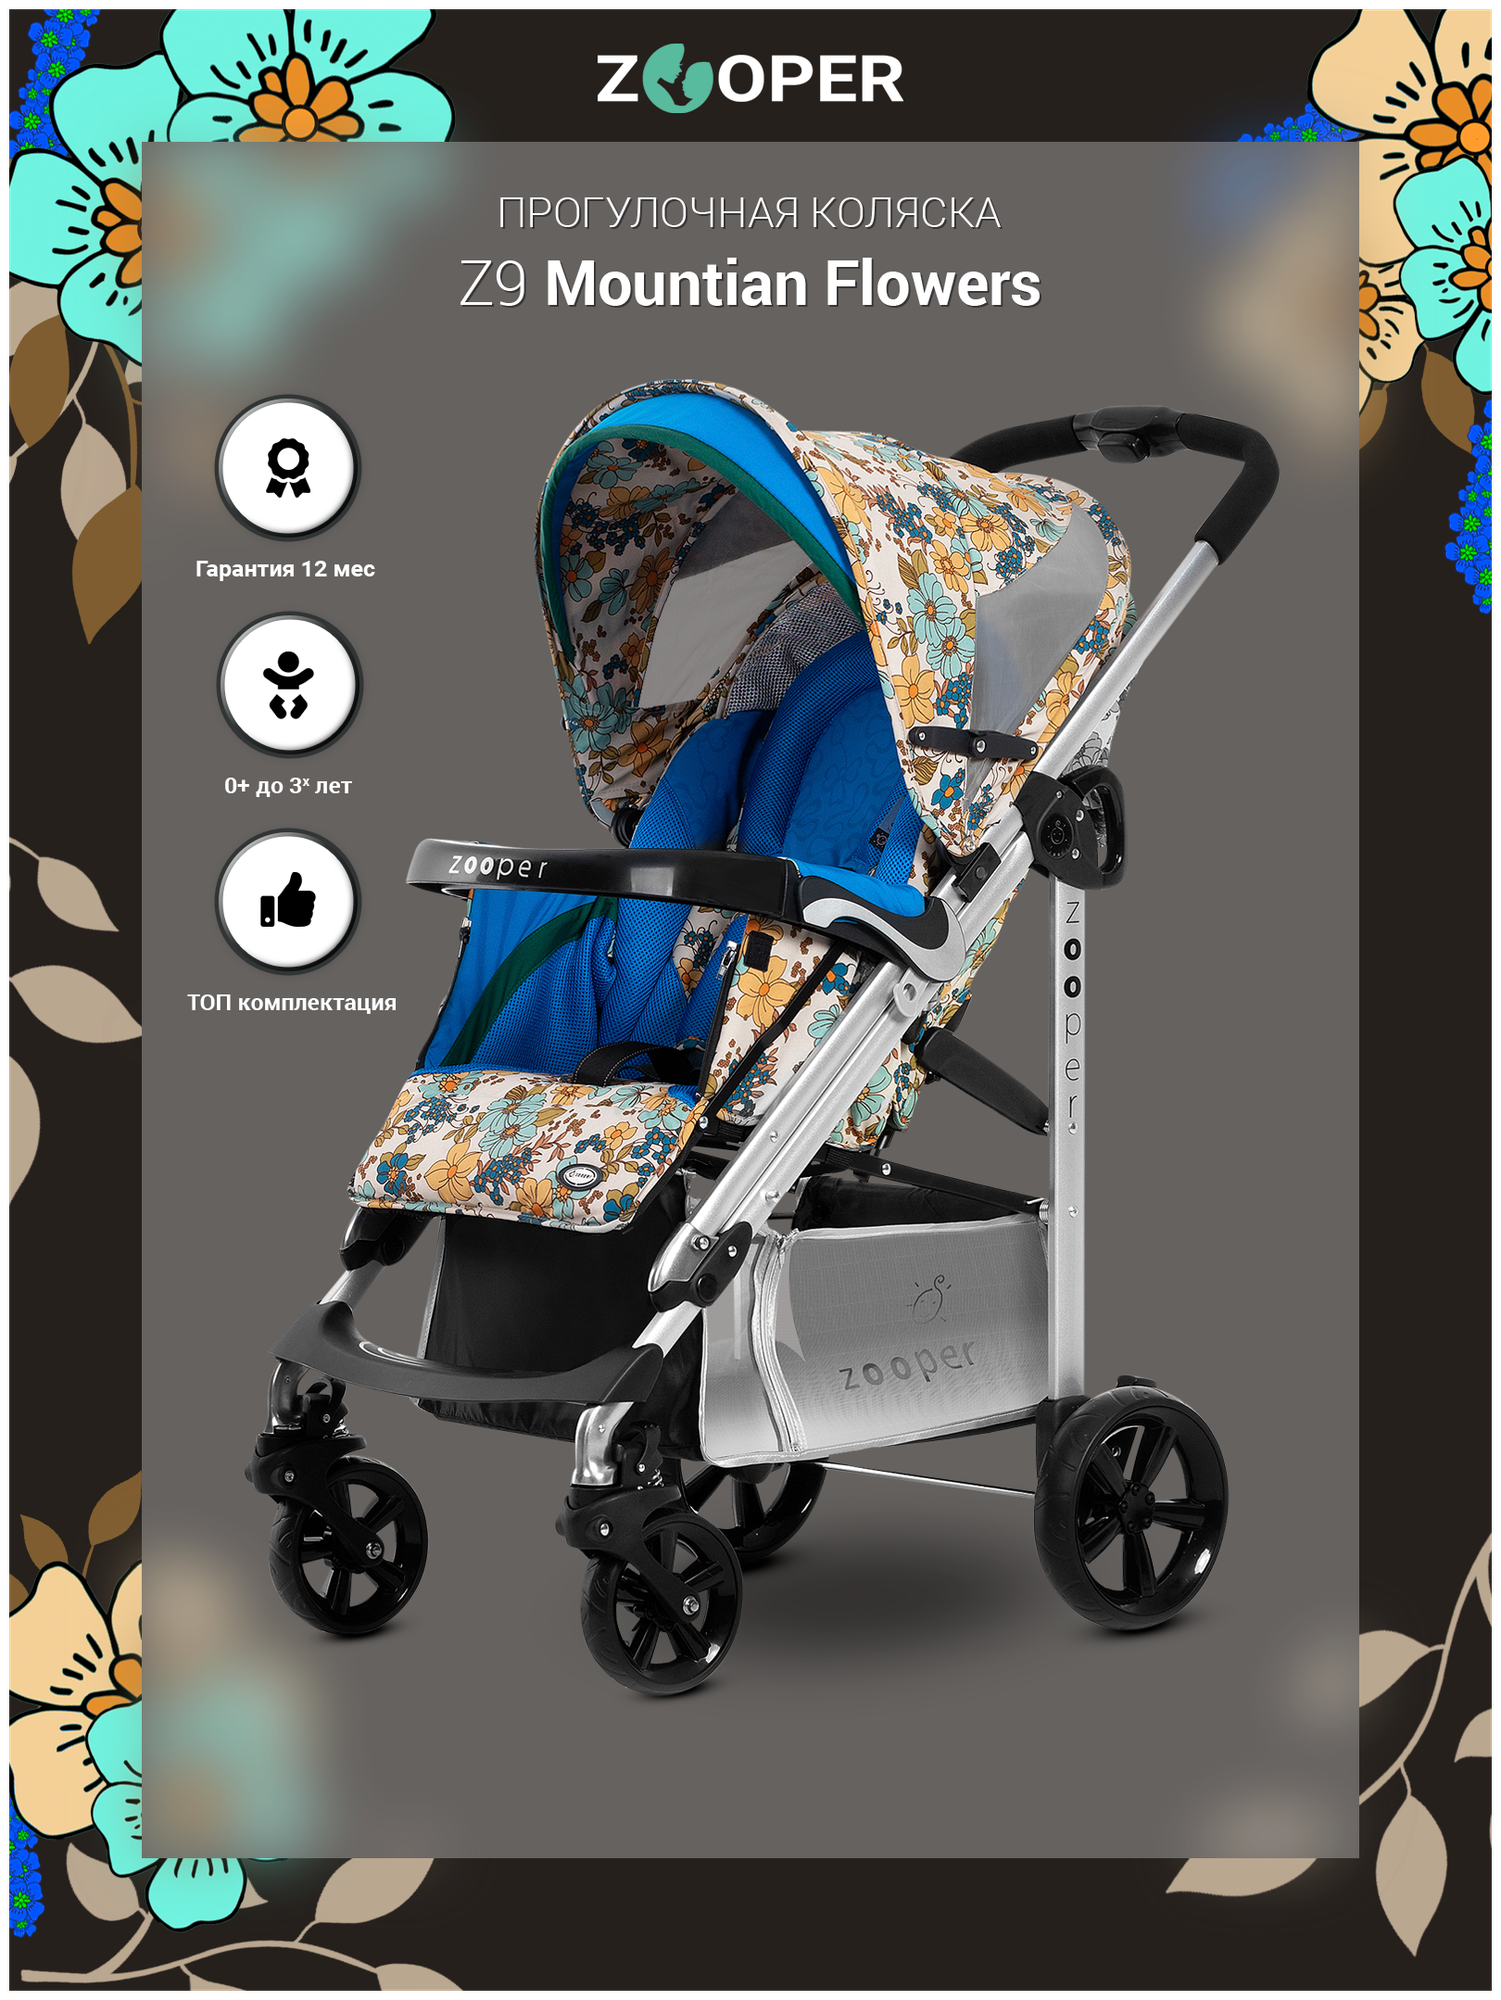 Прогулочная коляска Zooper Z9 Flowers (Mountian Flowers)